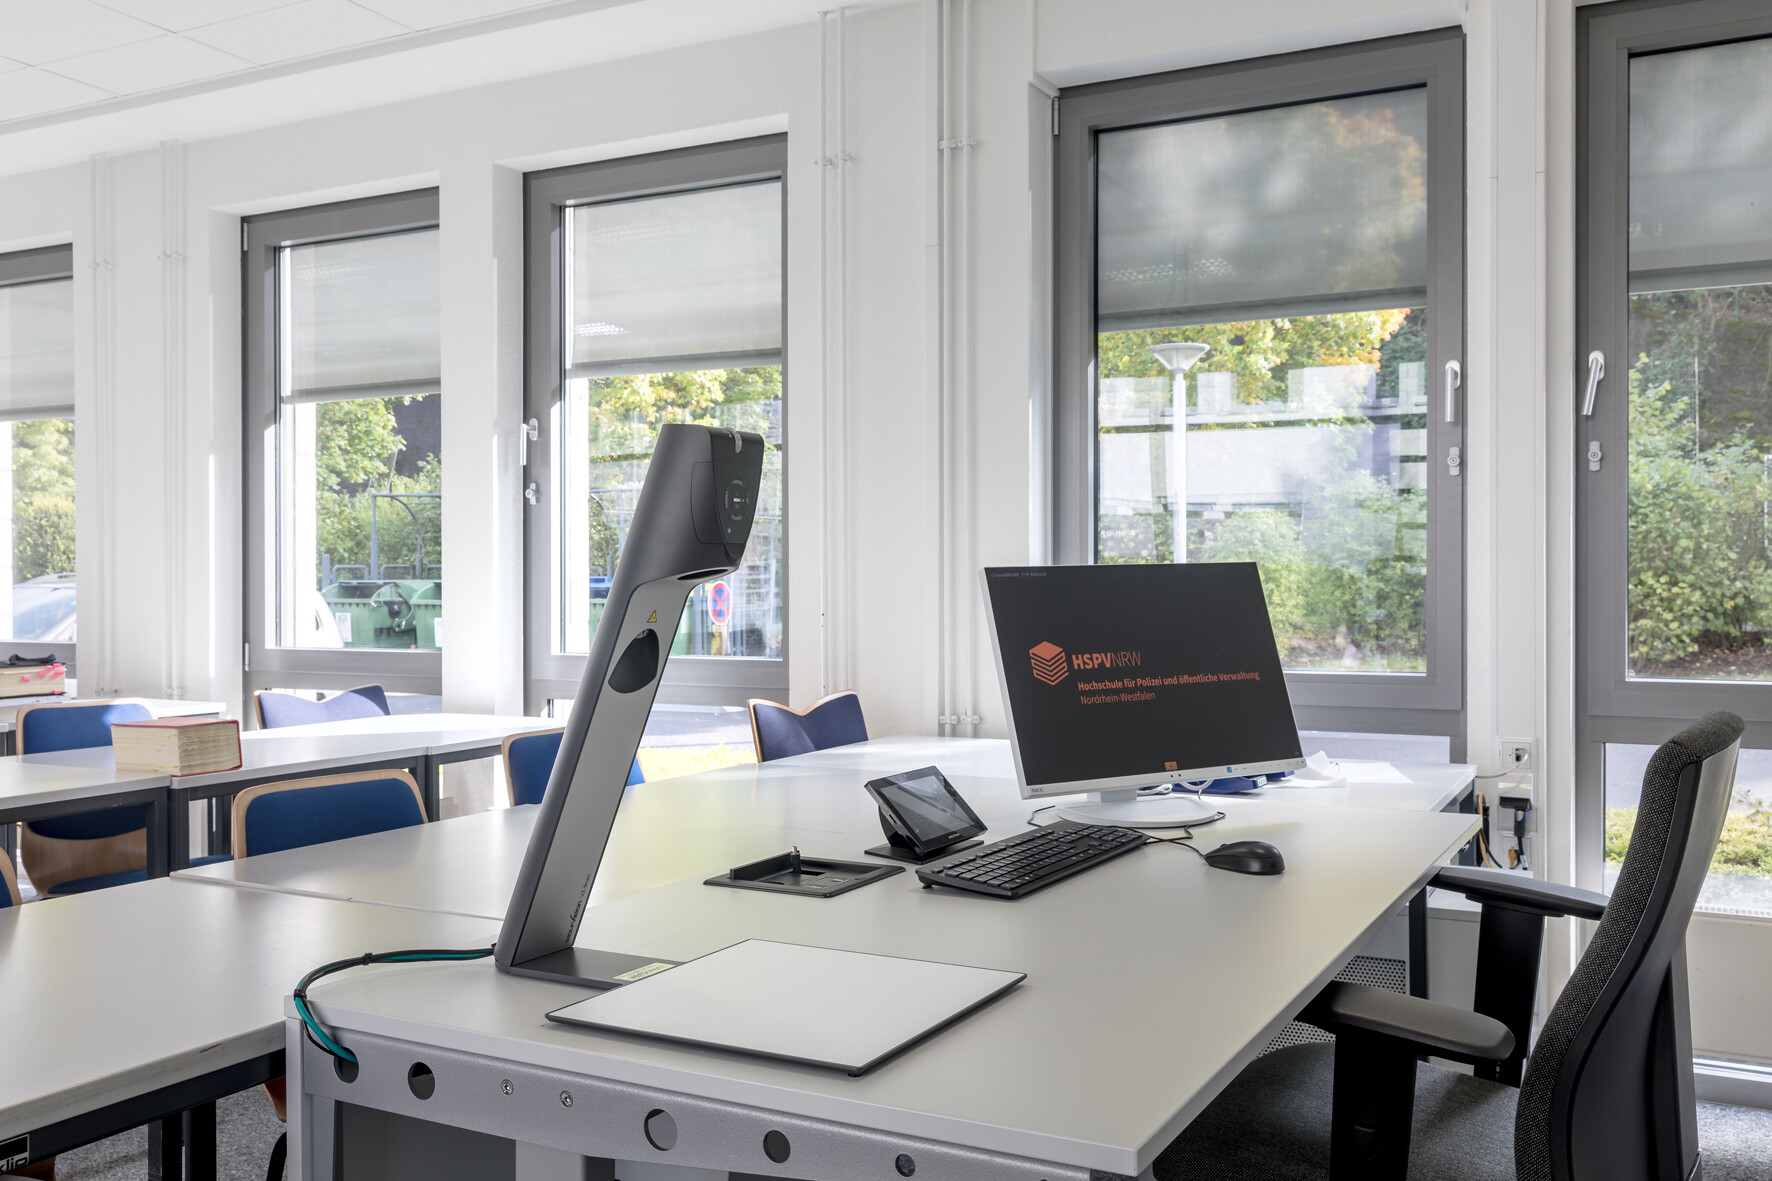 Classroom lectern with WolfVision VZ-8neo desktop Visualizer system. Photo: Copyright Jörg Küster